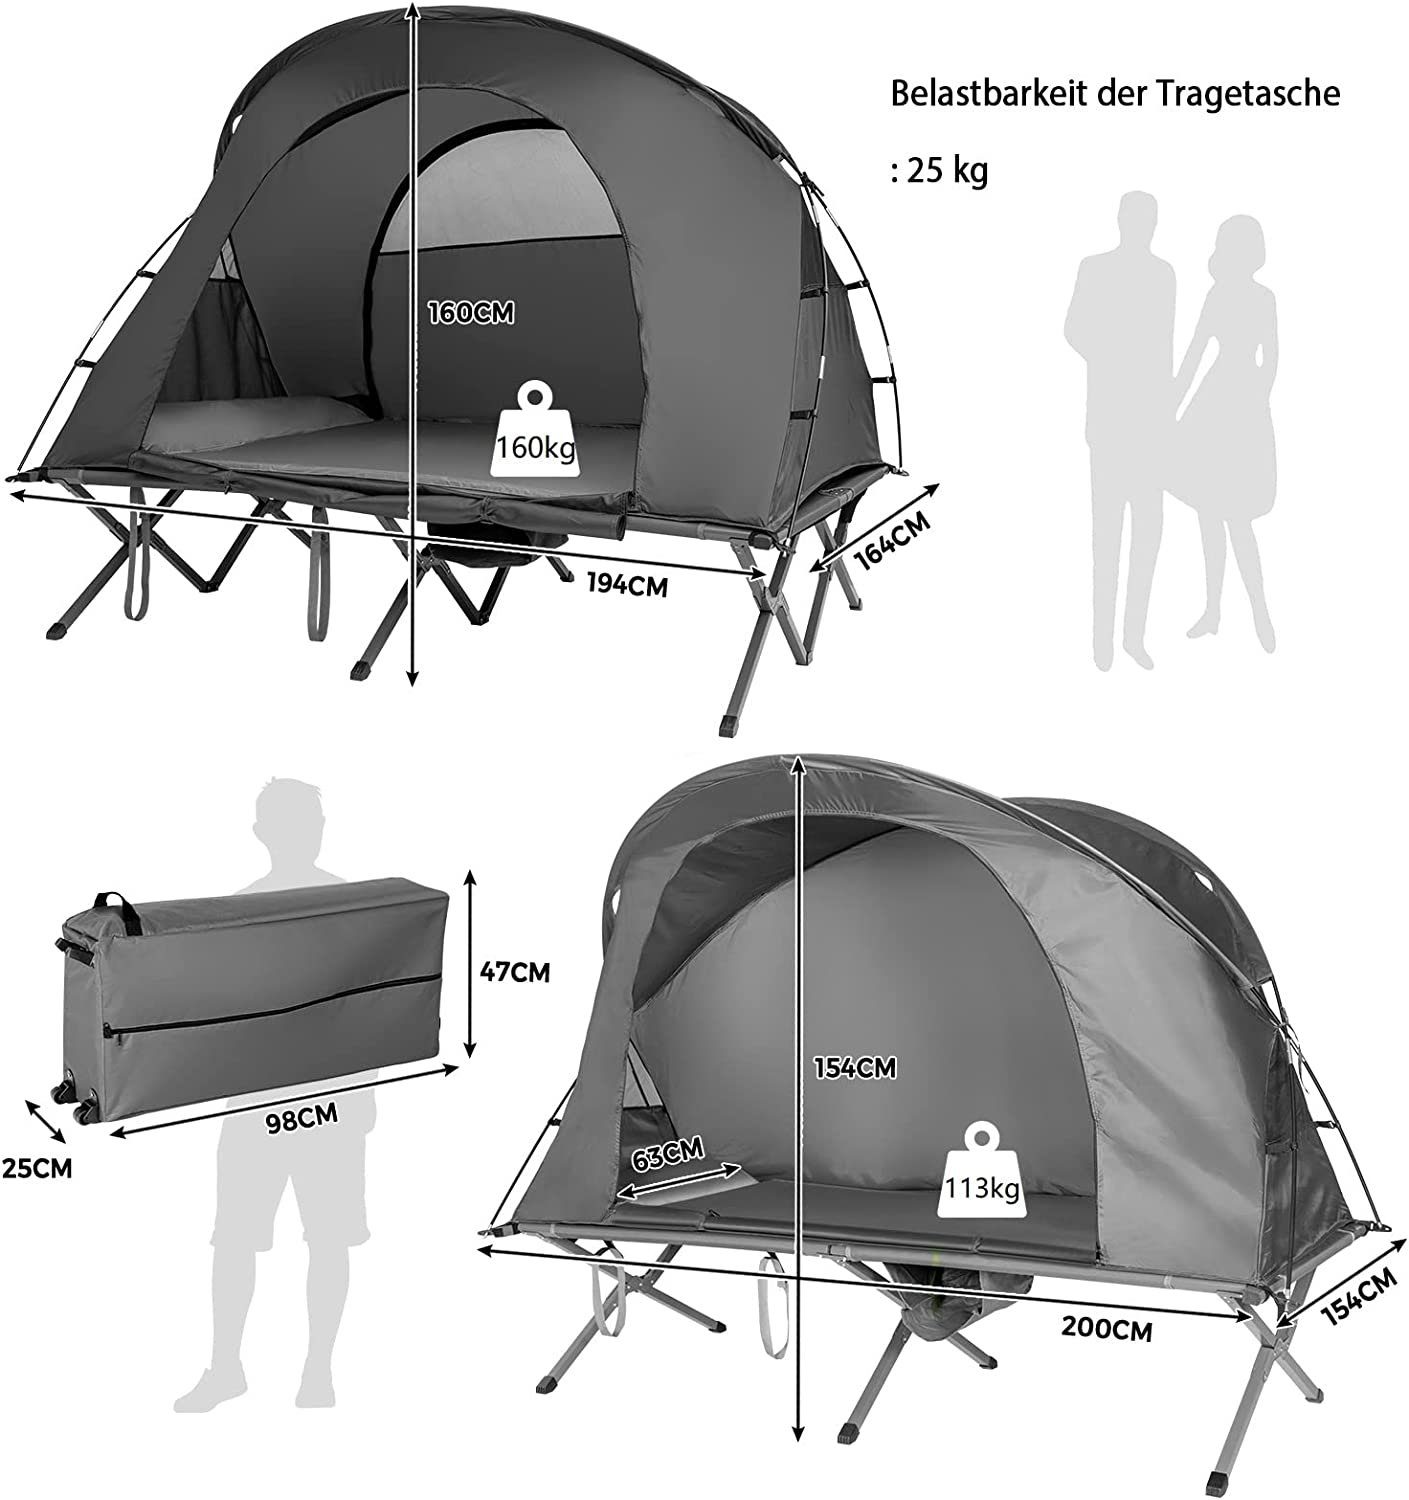 cm Personen: mit in Feldbett, KOMFOTTEU Campingzelt Kuppelzelt 4 2, 194×146×160 grau 1